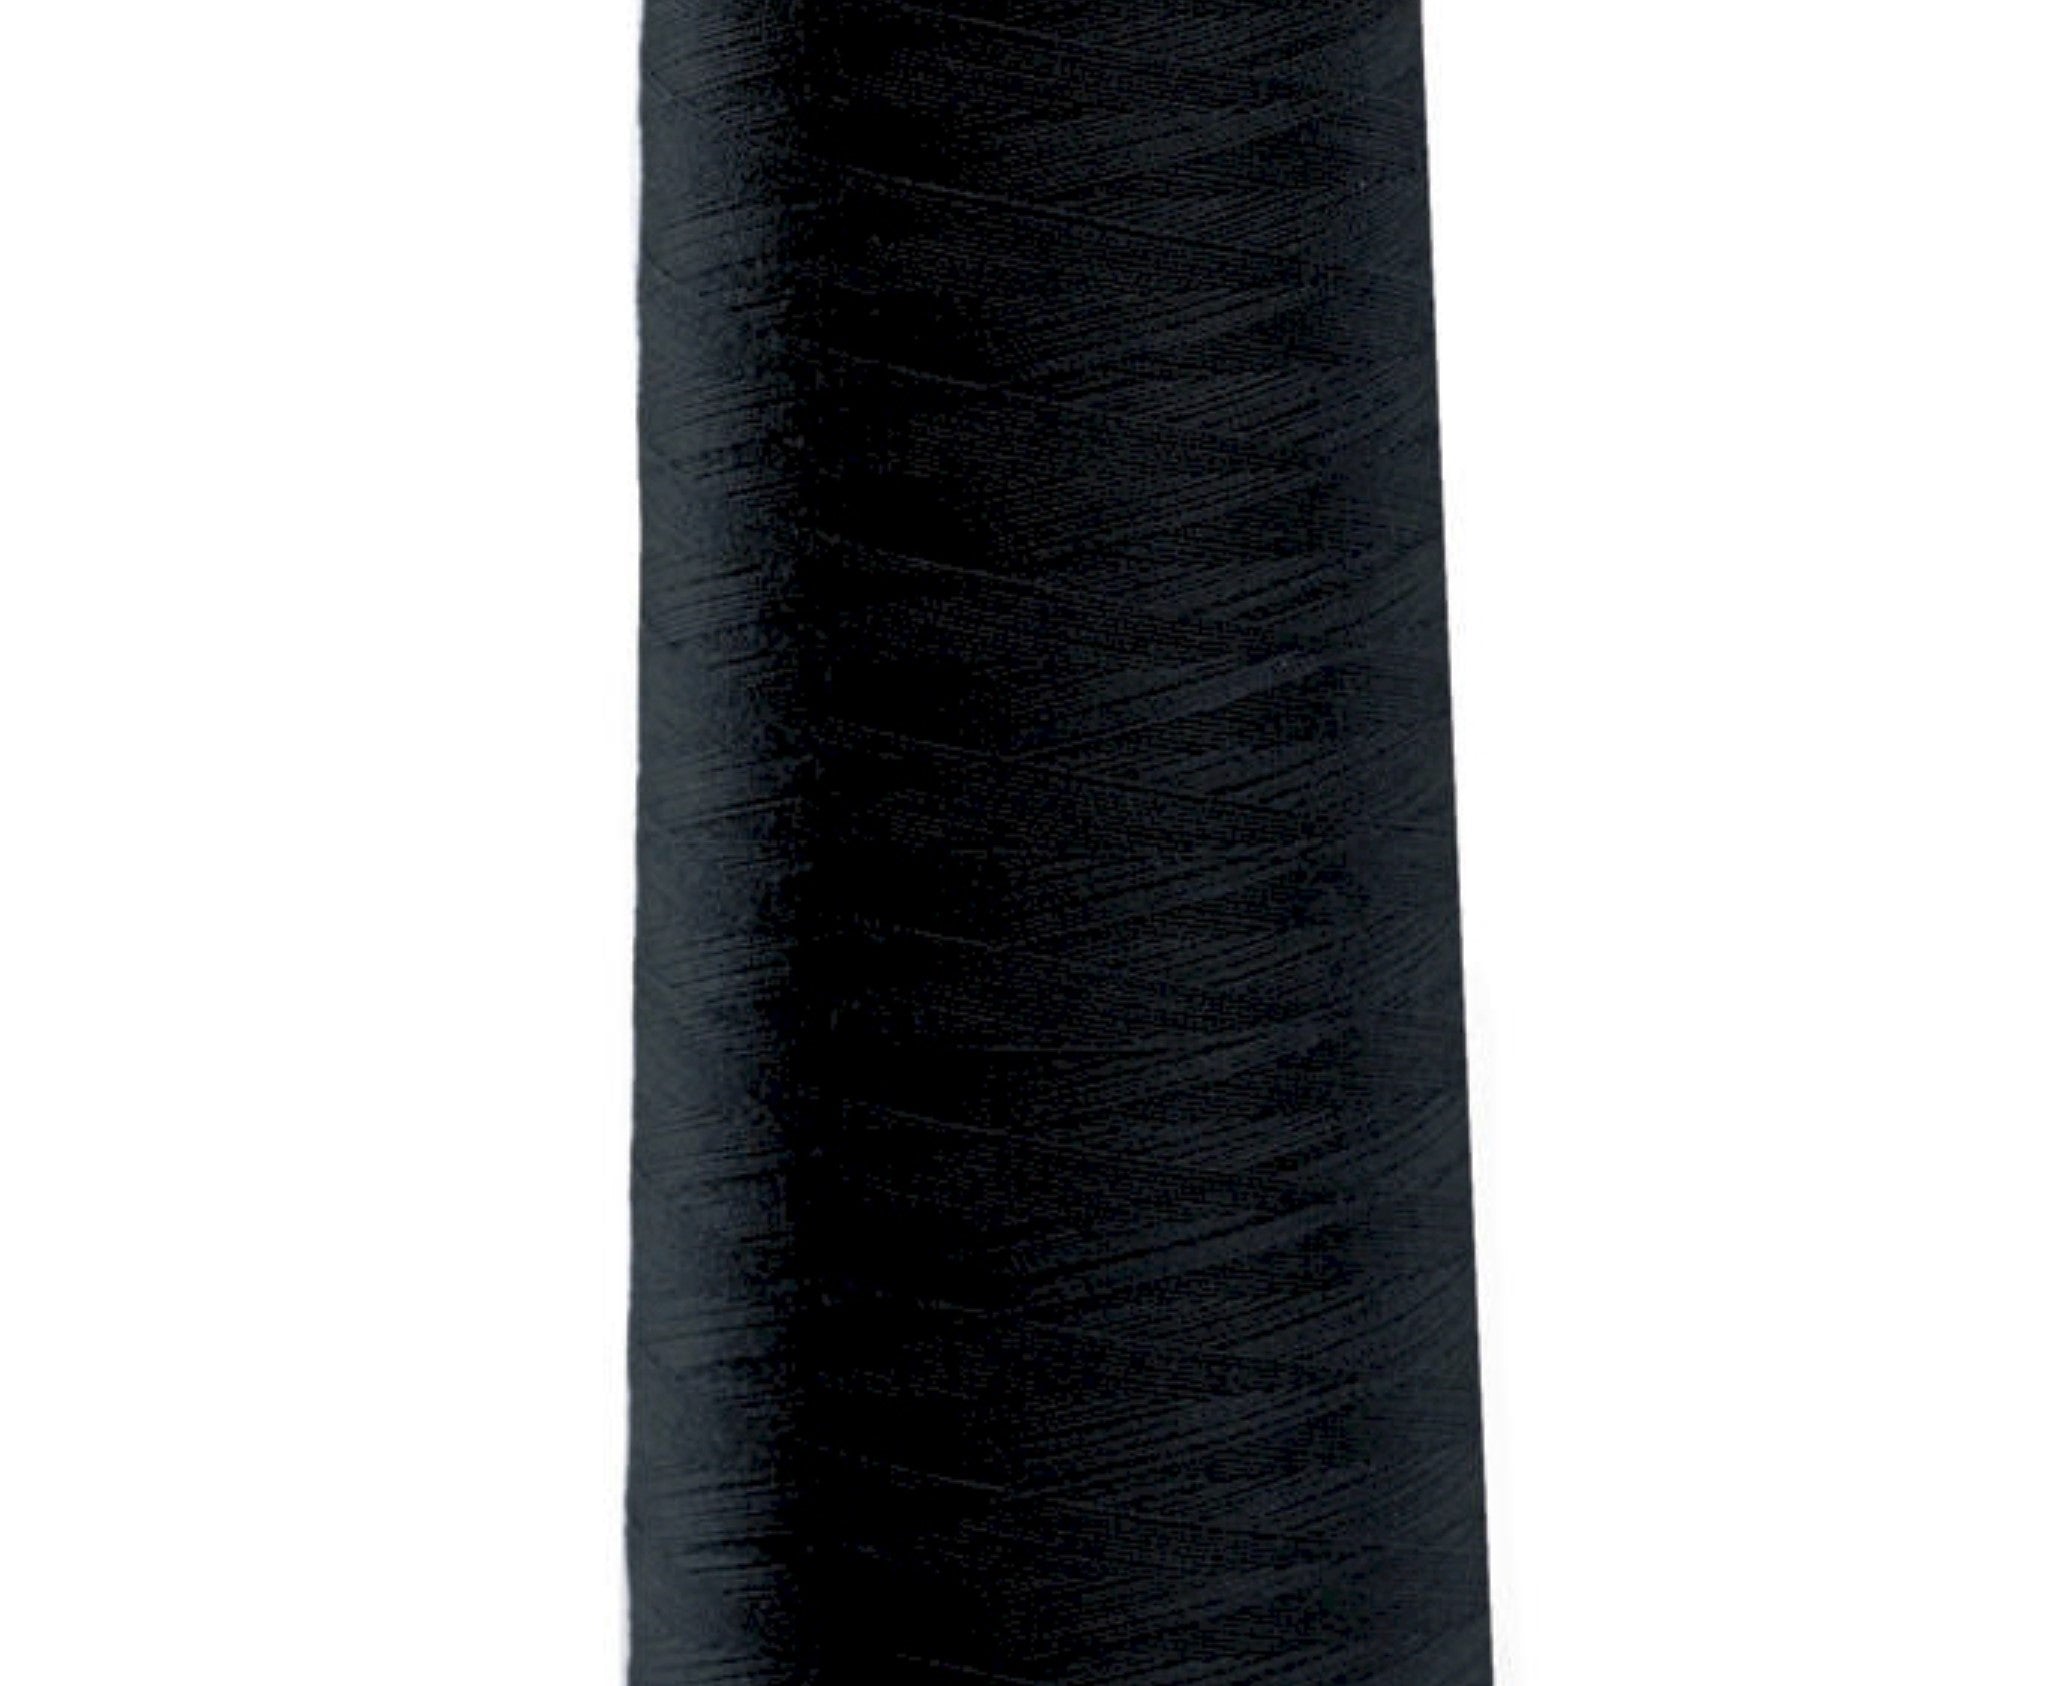 Black Color, Aerolock Premium Serger Thread, Ref. 8000 by Madeira®